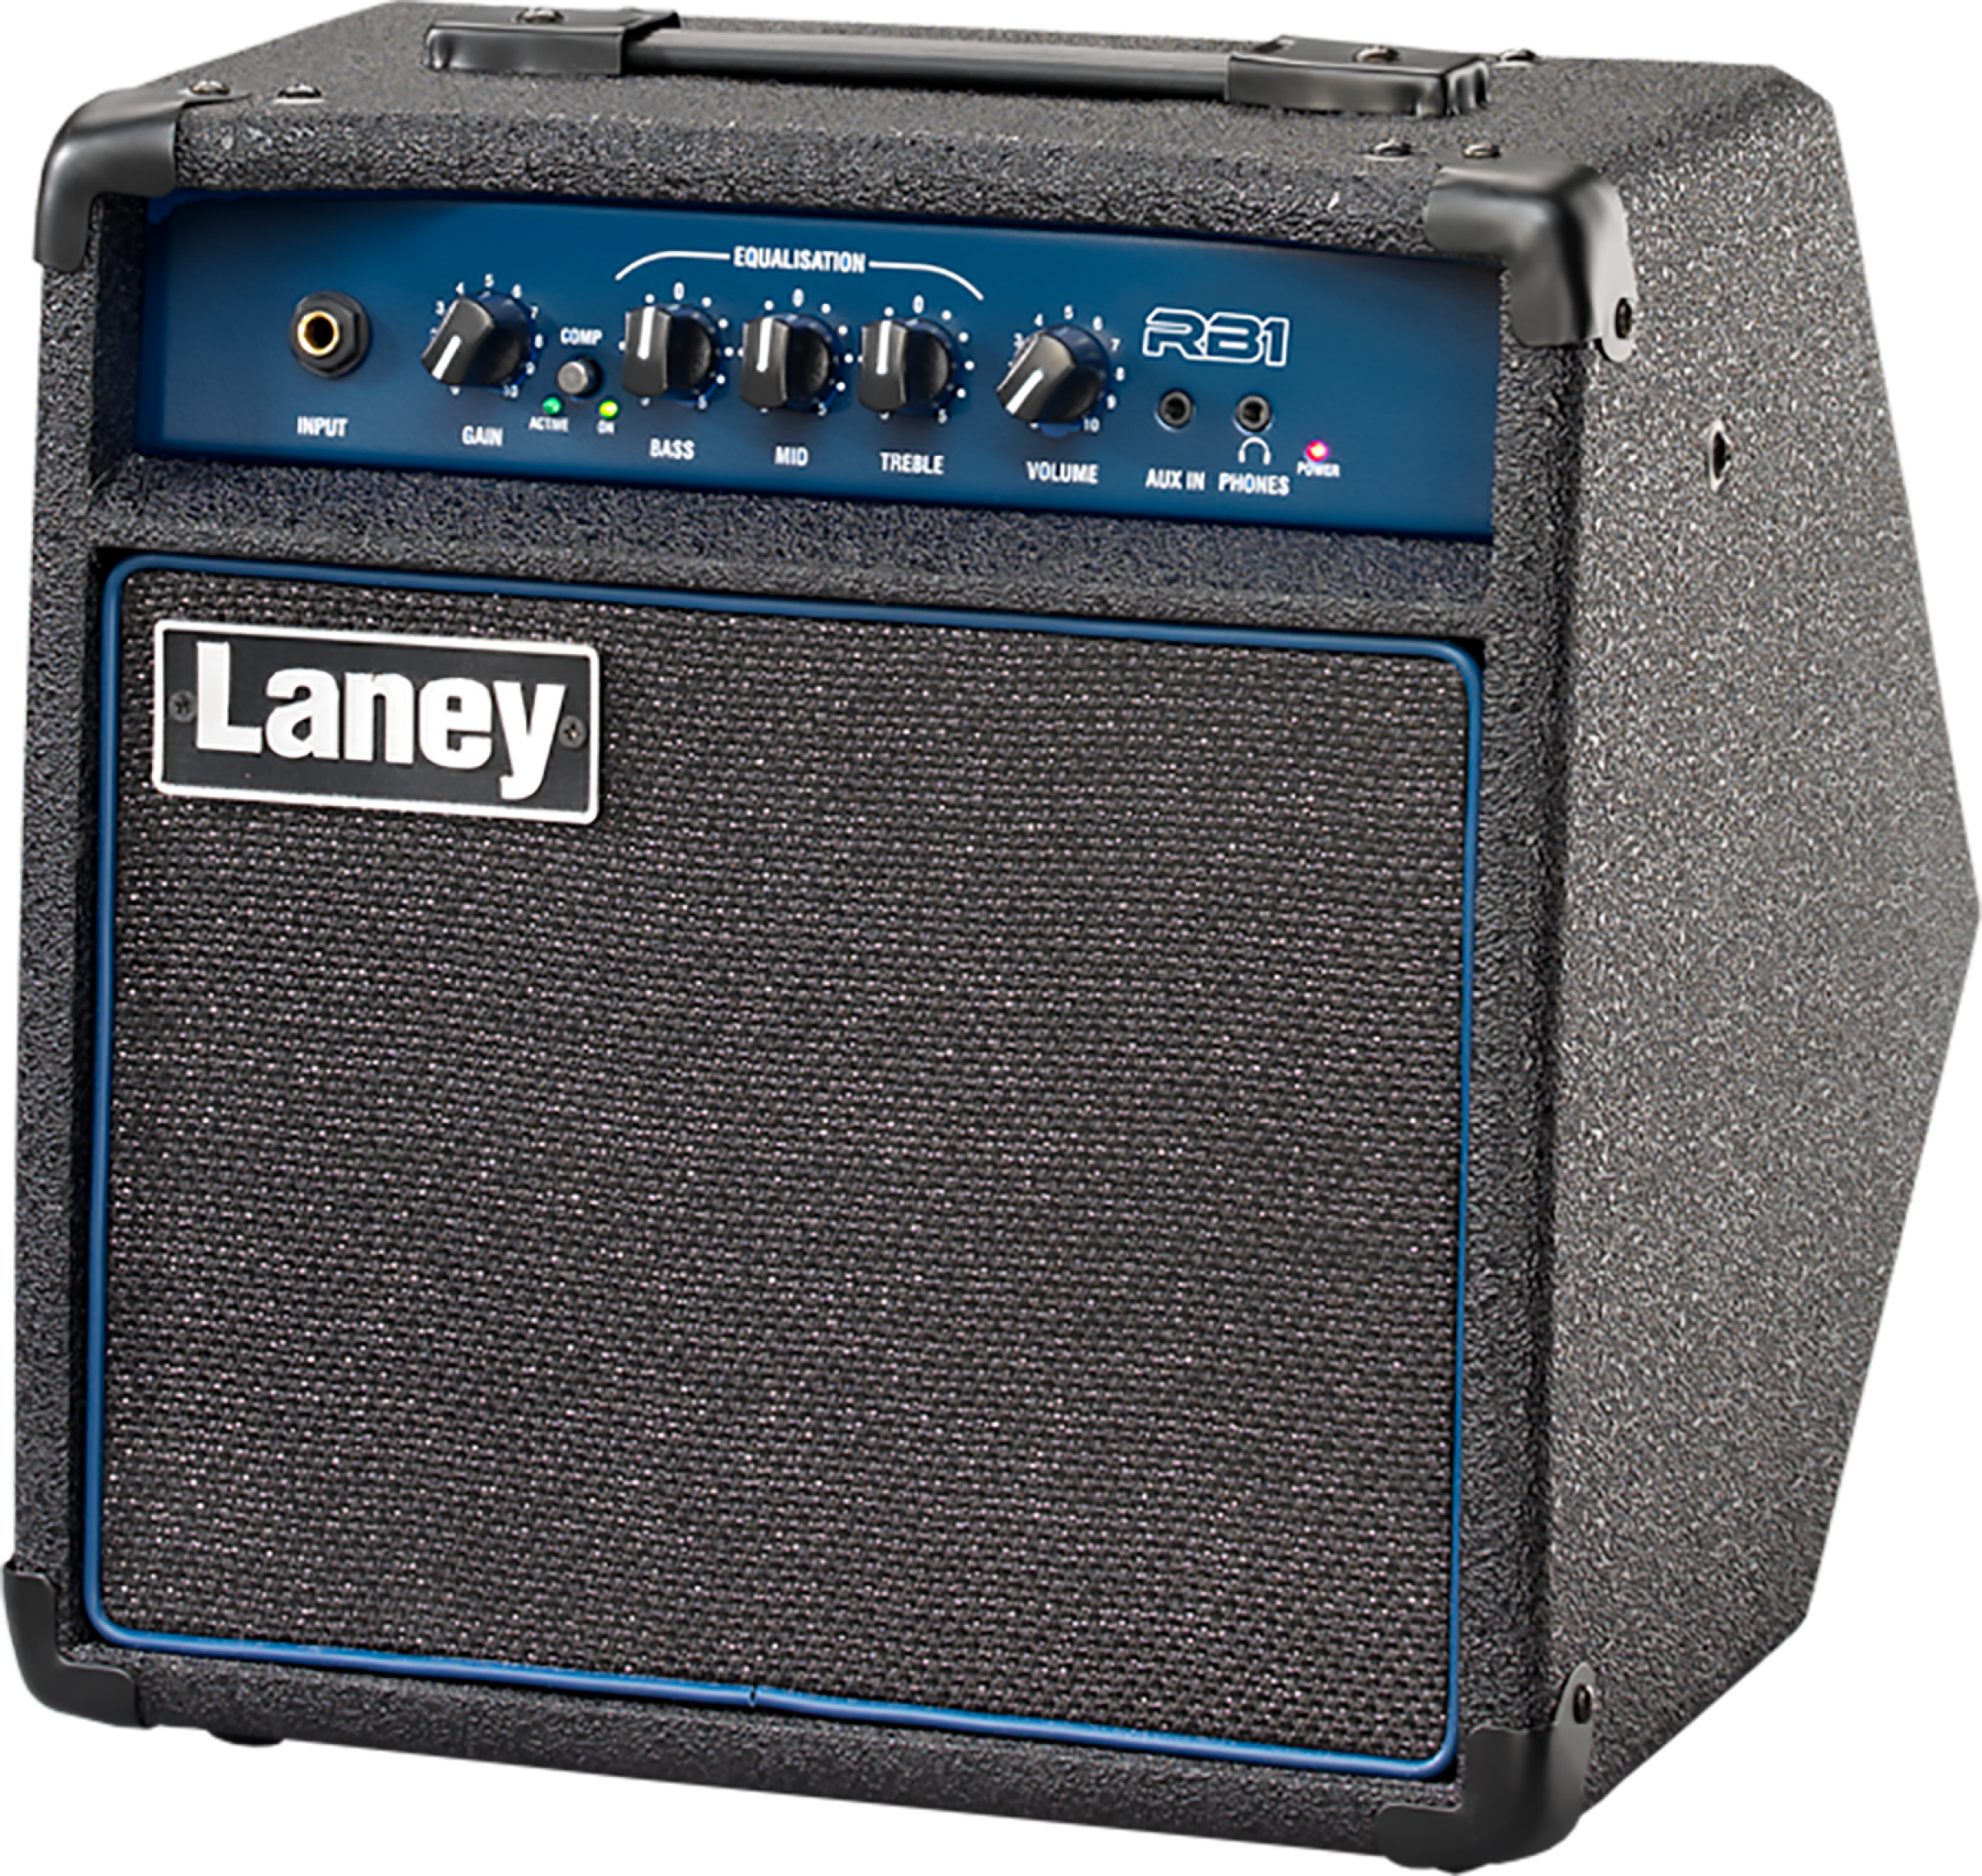 Laney Richter Rb1 15w 1x8 Black - Bass combo amp - Variation 2